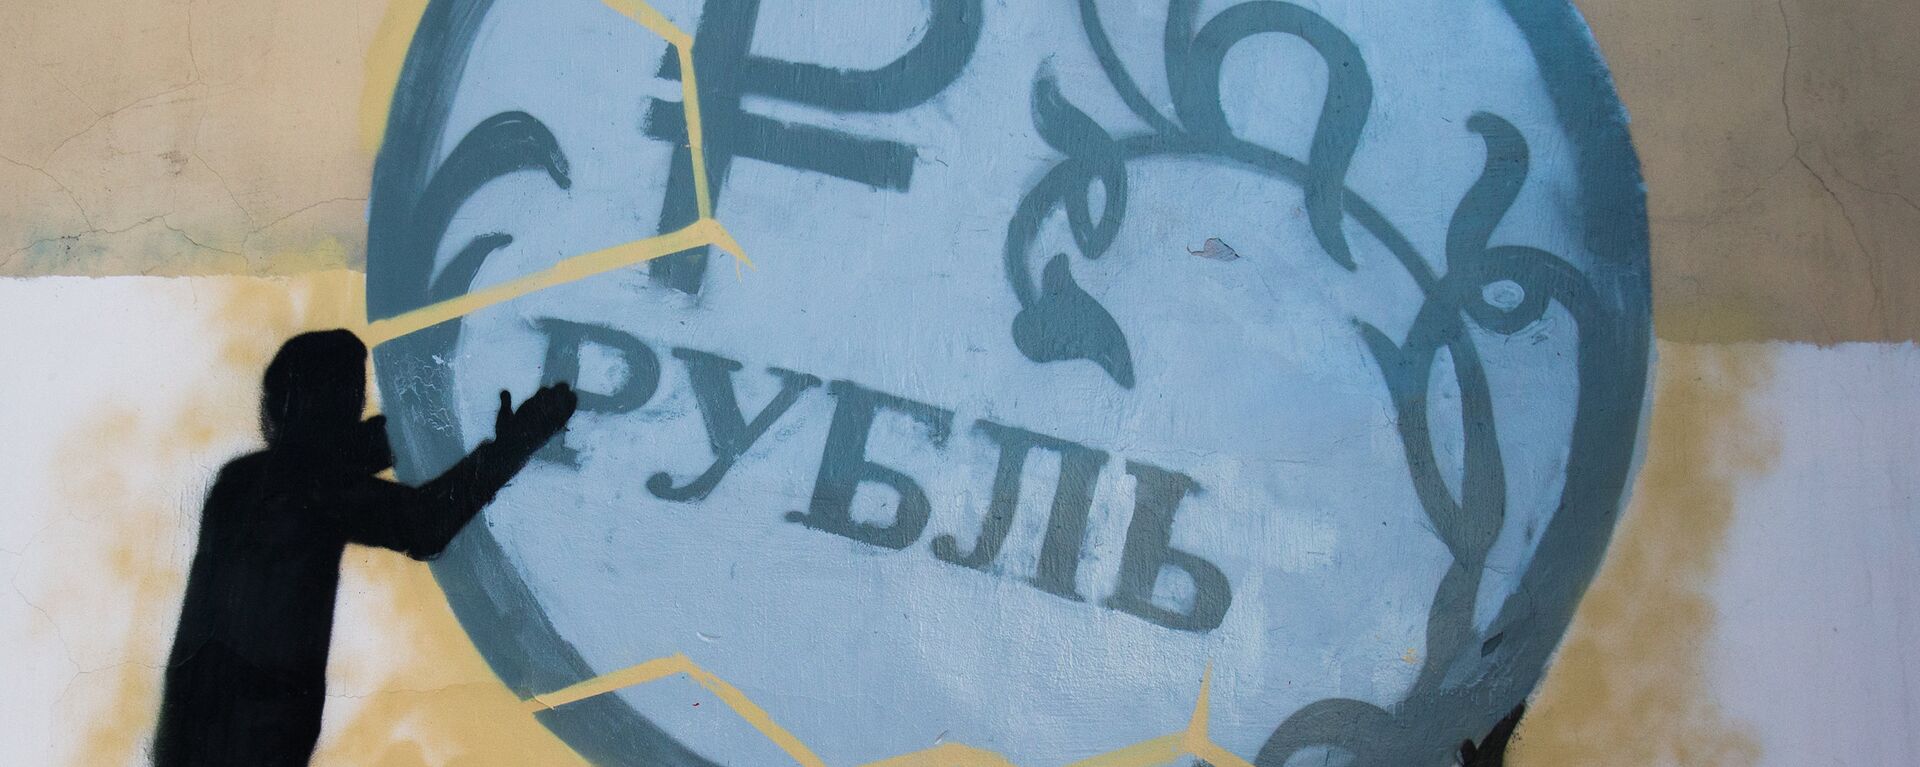 Russian currency ruble on a graffiti in St. Petersburg - Sputnik International, 1920, 09.12.2021